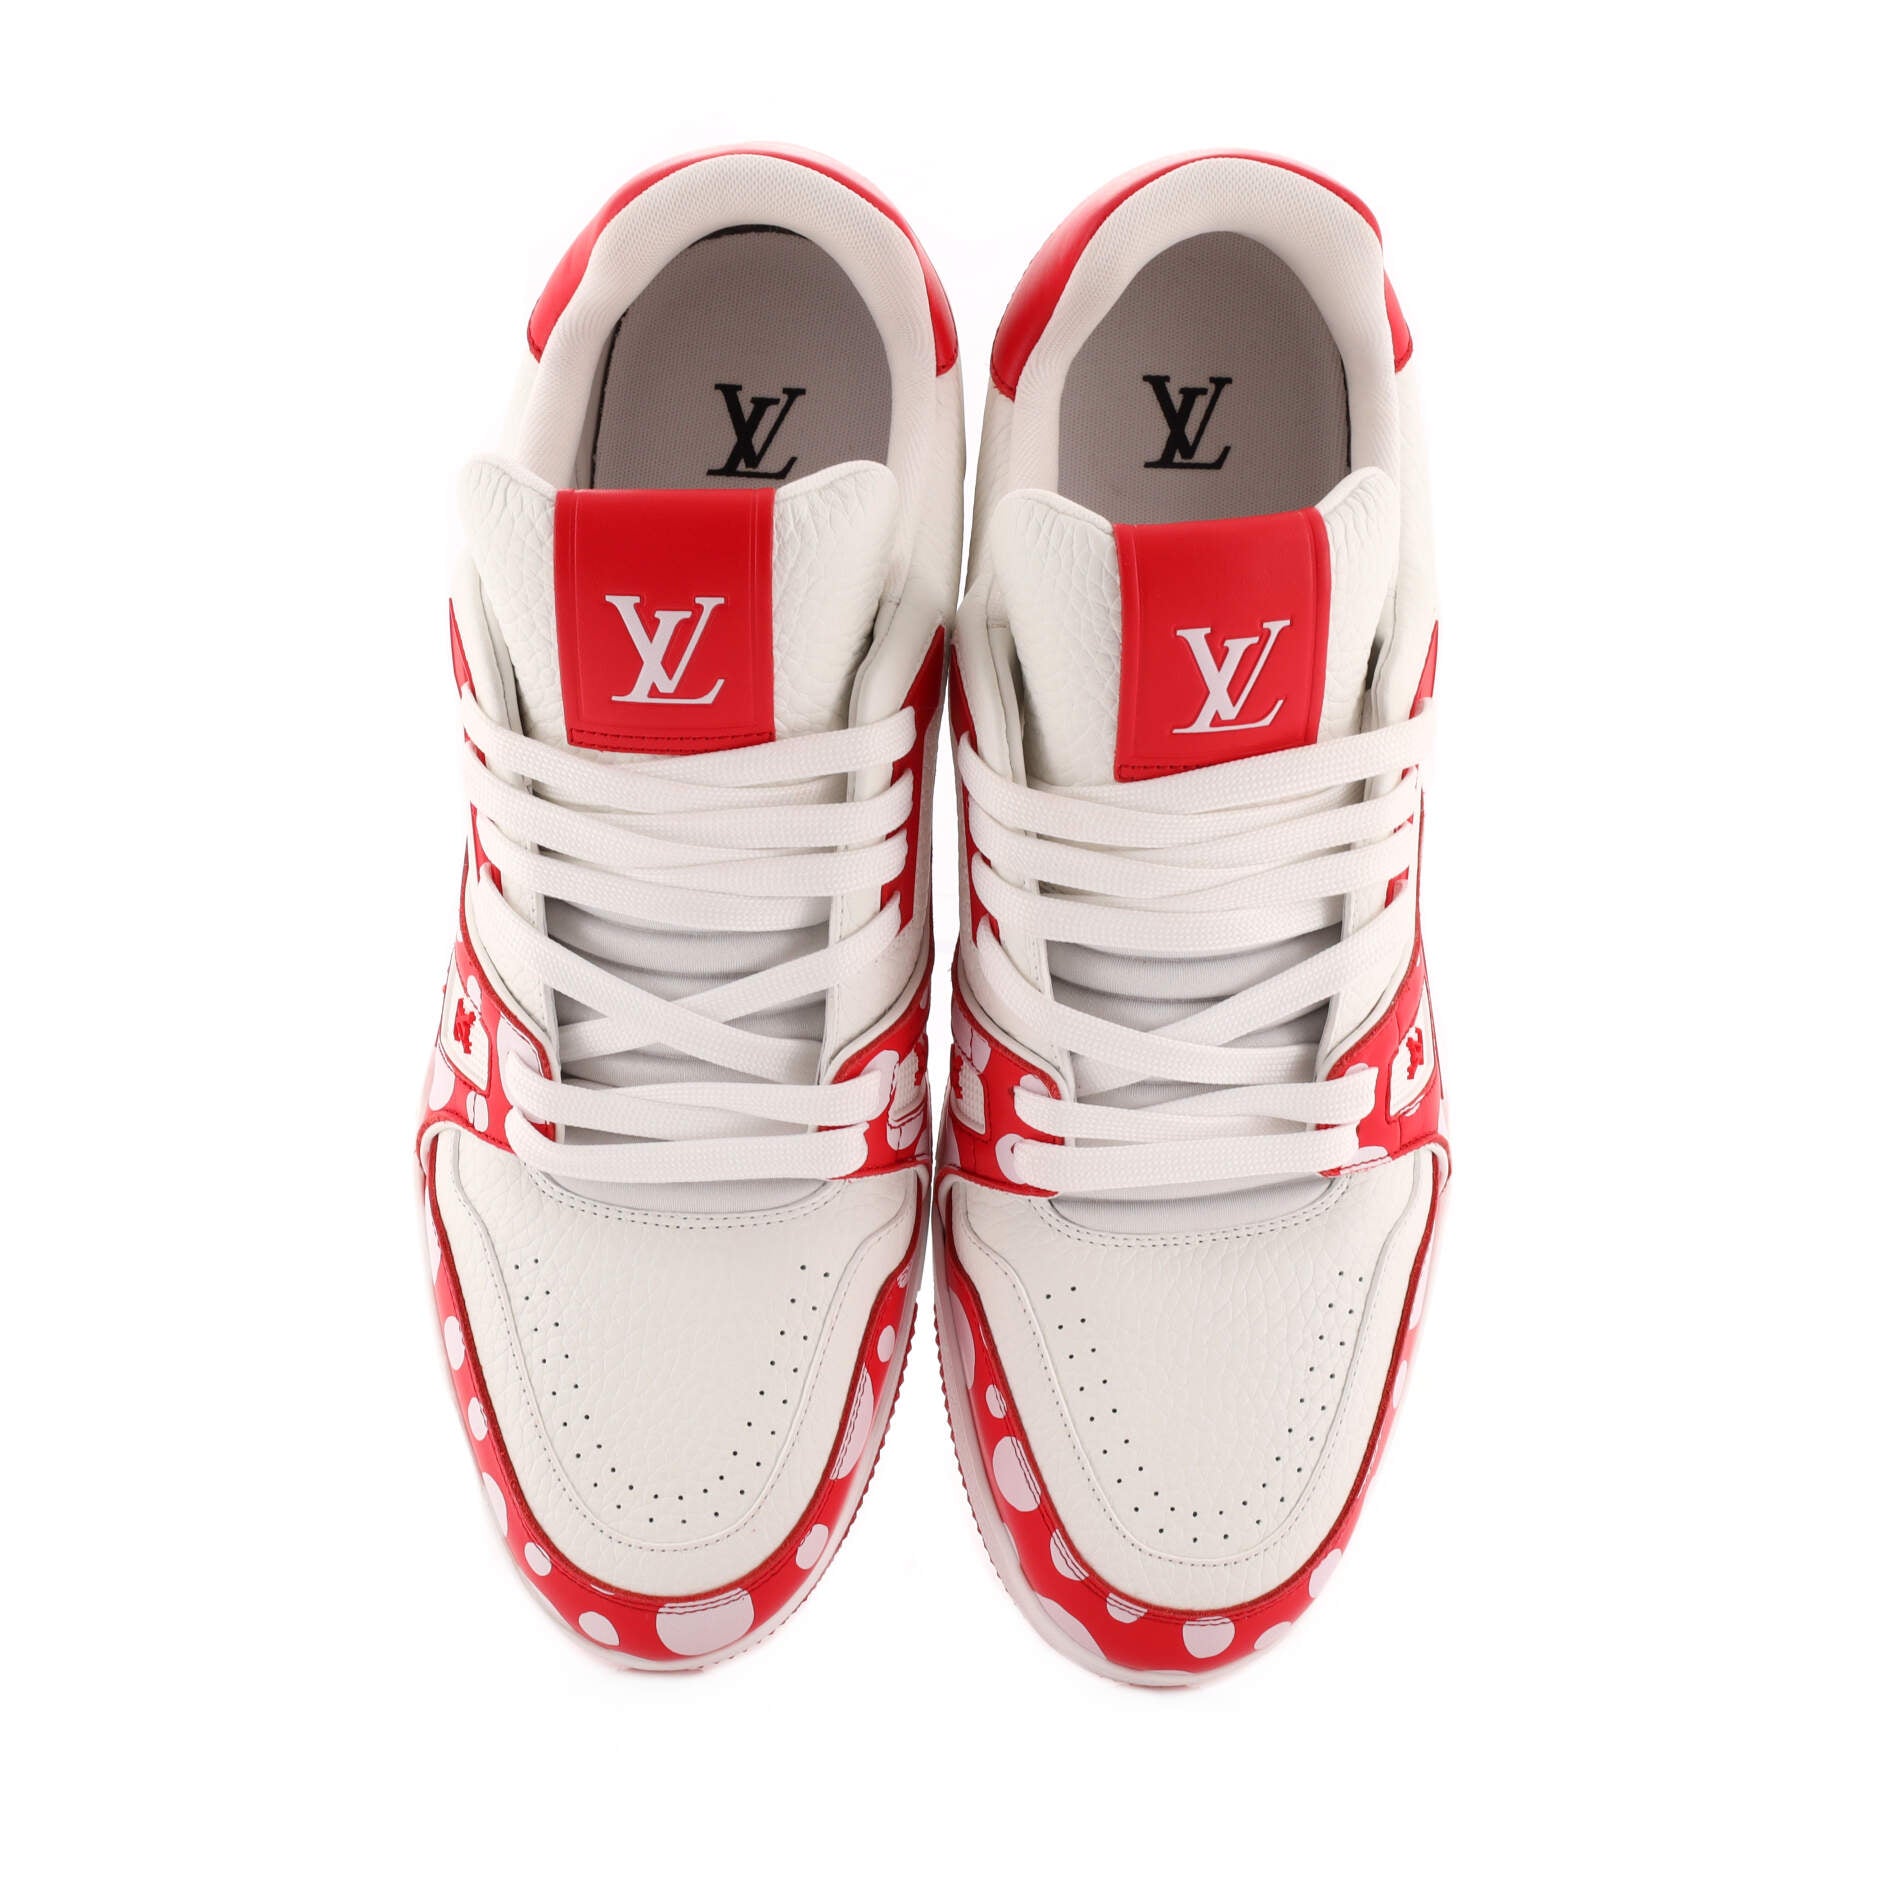 Louis Vuitton Rivoli Sneakers $785